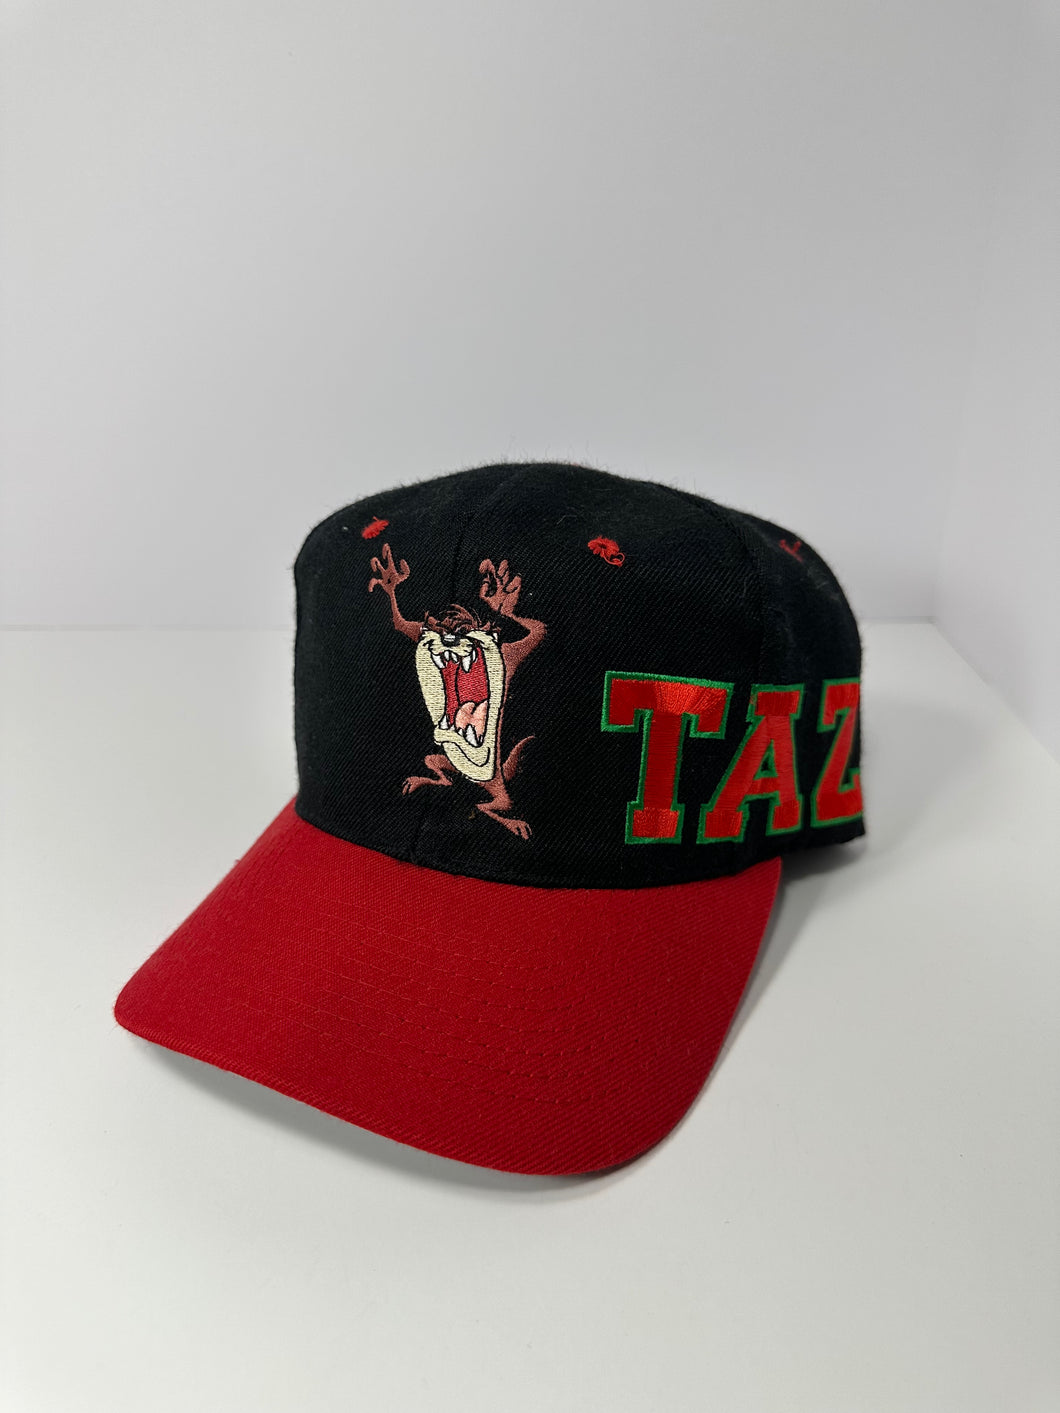 Vintage Taz 1990s Black and Red Snapback Hat